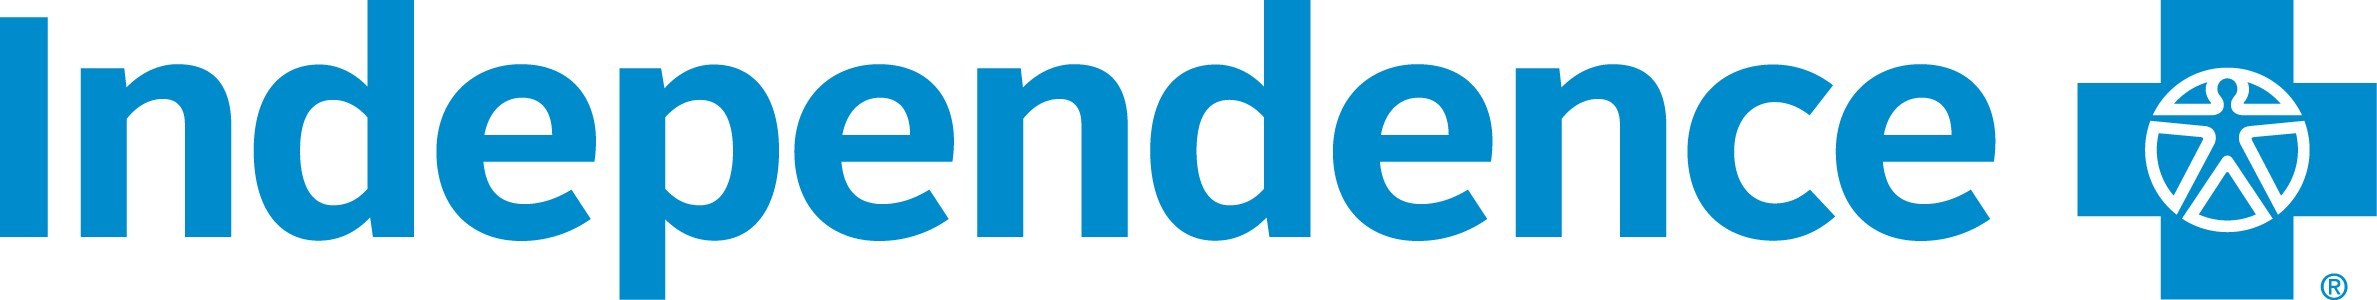 Independence_Blue_Cross_Logo